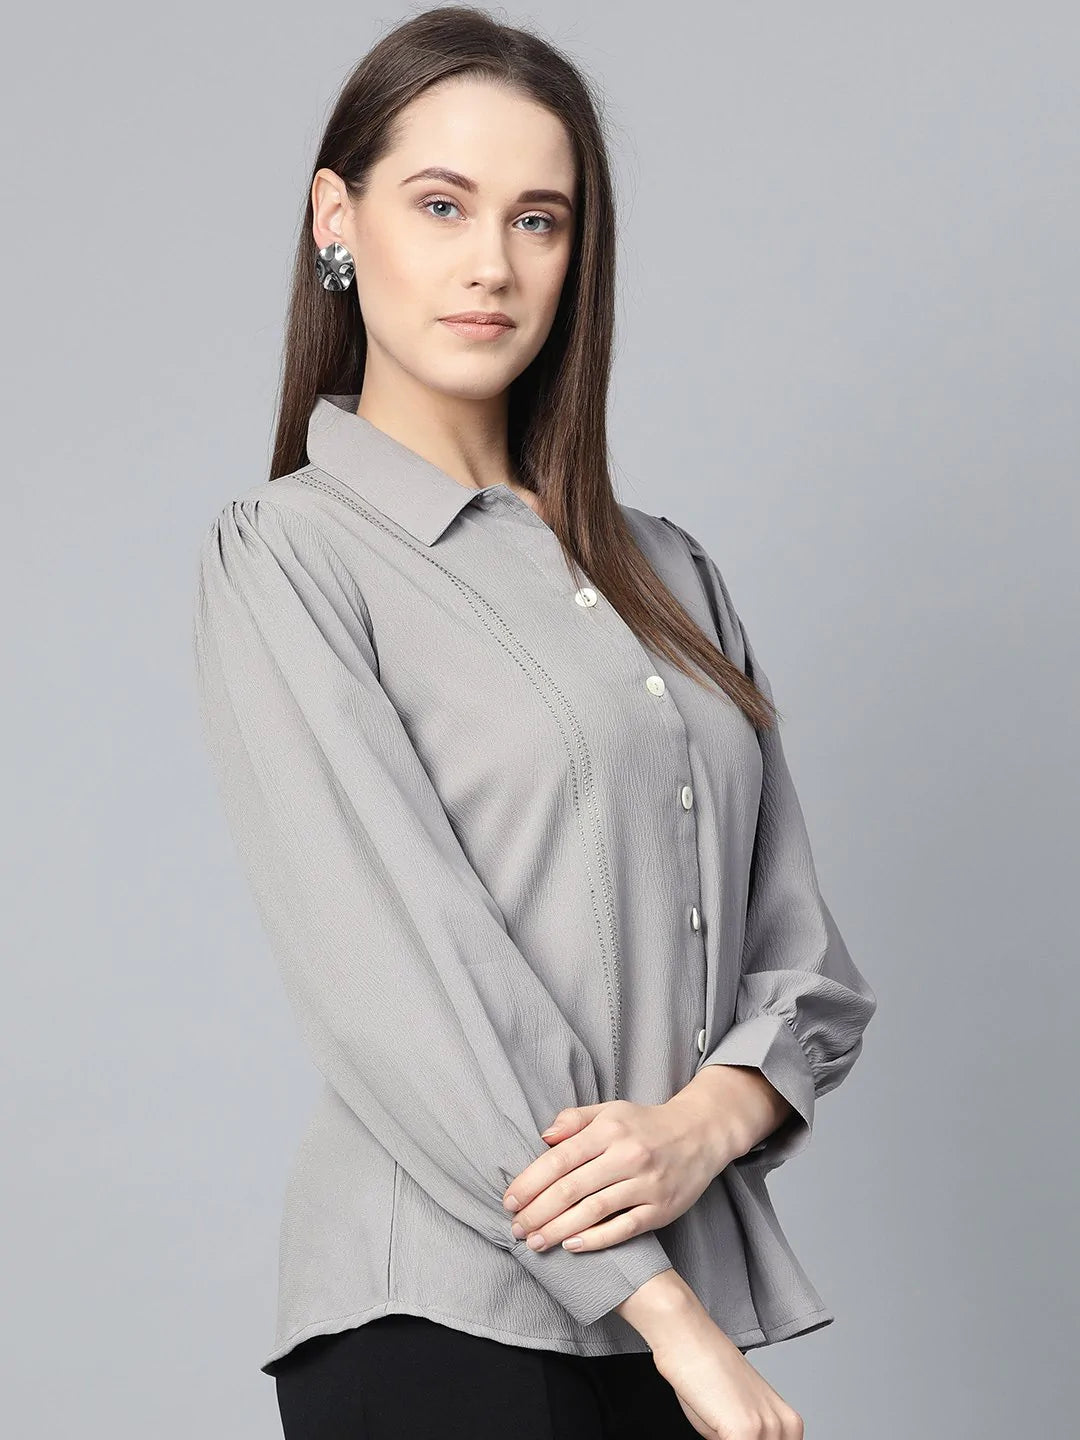 Jompers Women Grey Regular Fit Crinkled Effect Casual Shirt ( JOT 7002 Grey )